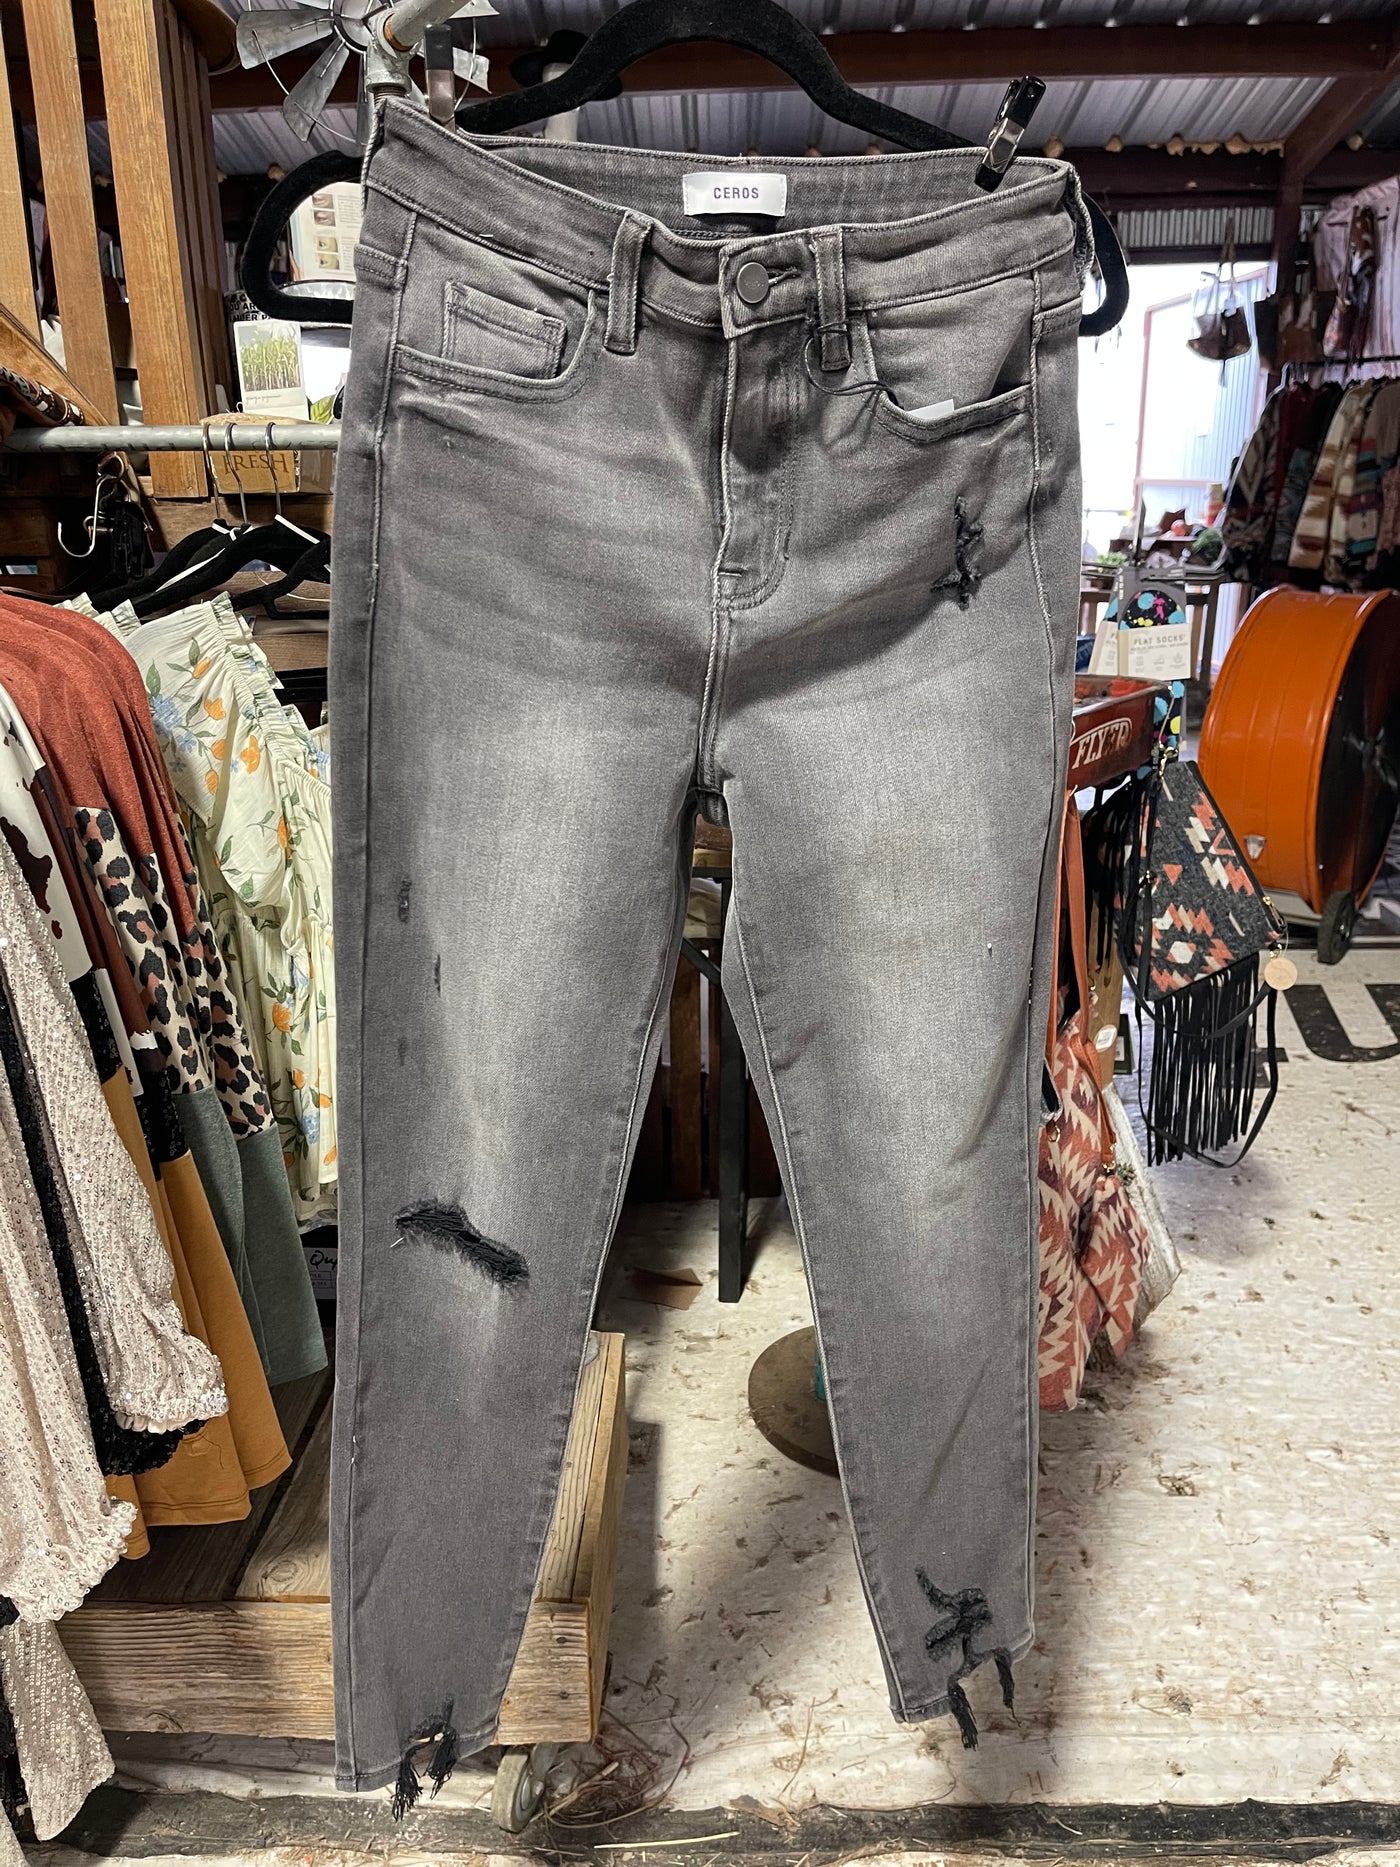 Gray Ceros jeans